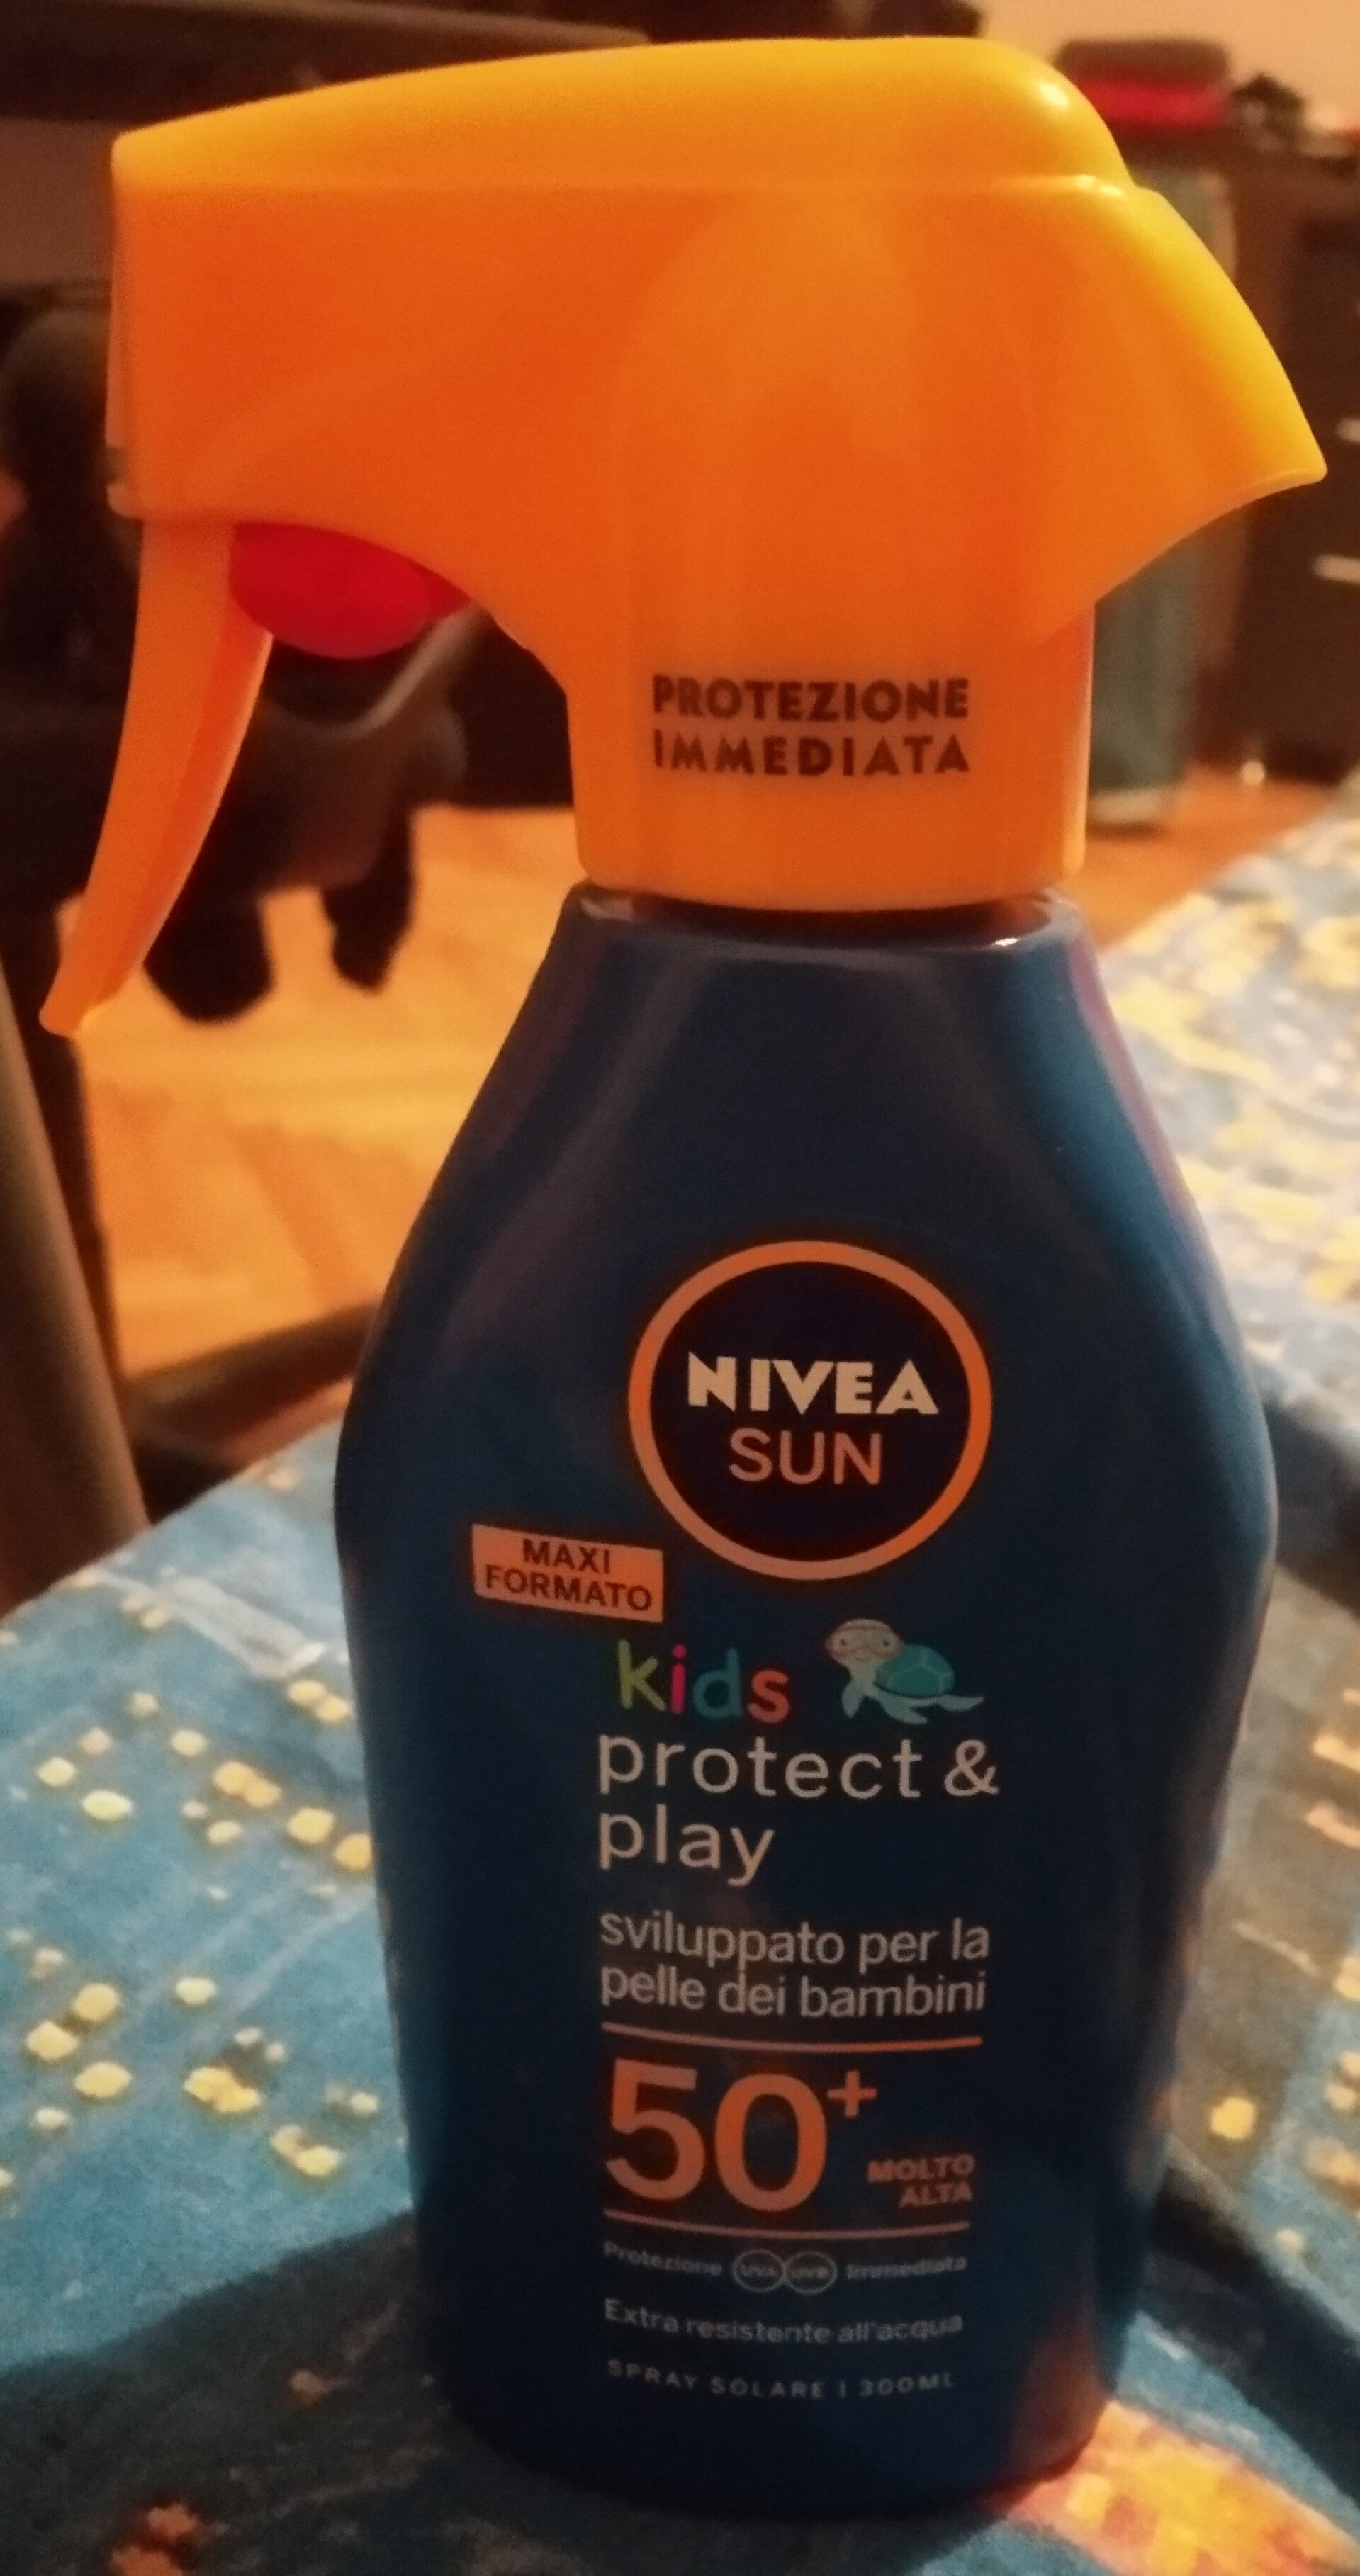 Nivea sun kids protect & play 50+ - Product - it